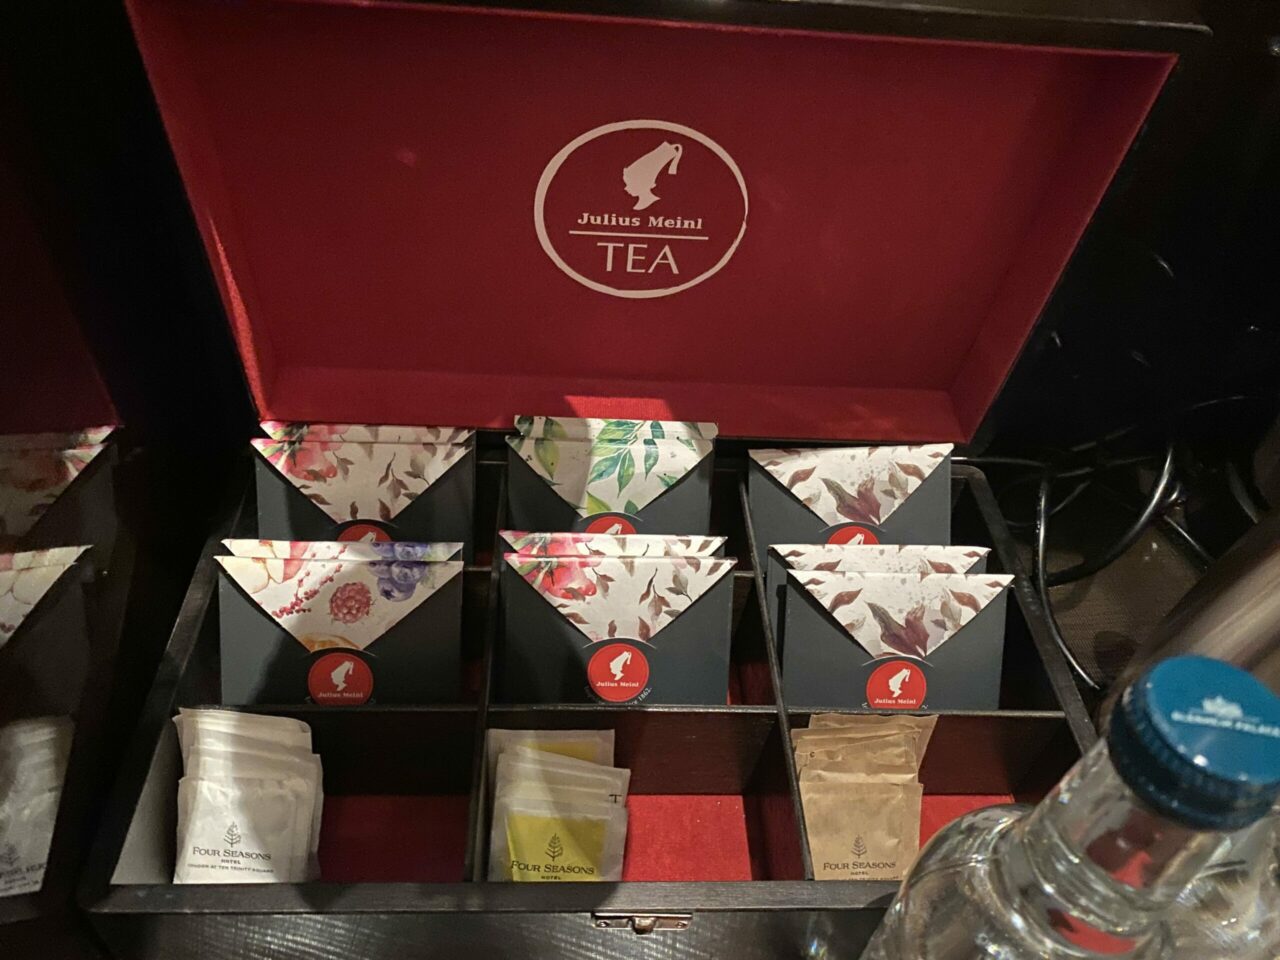 Four Seasons Hotel London teabags